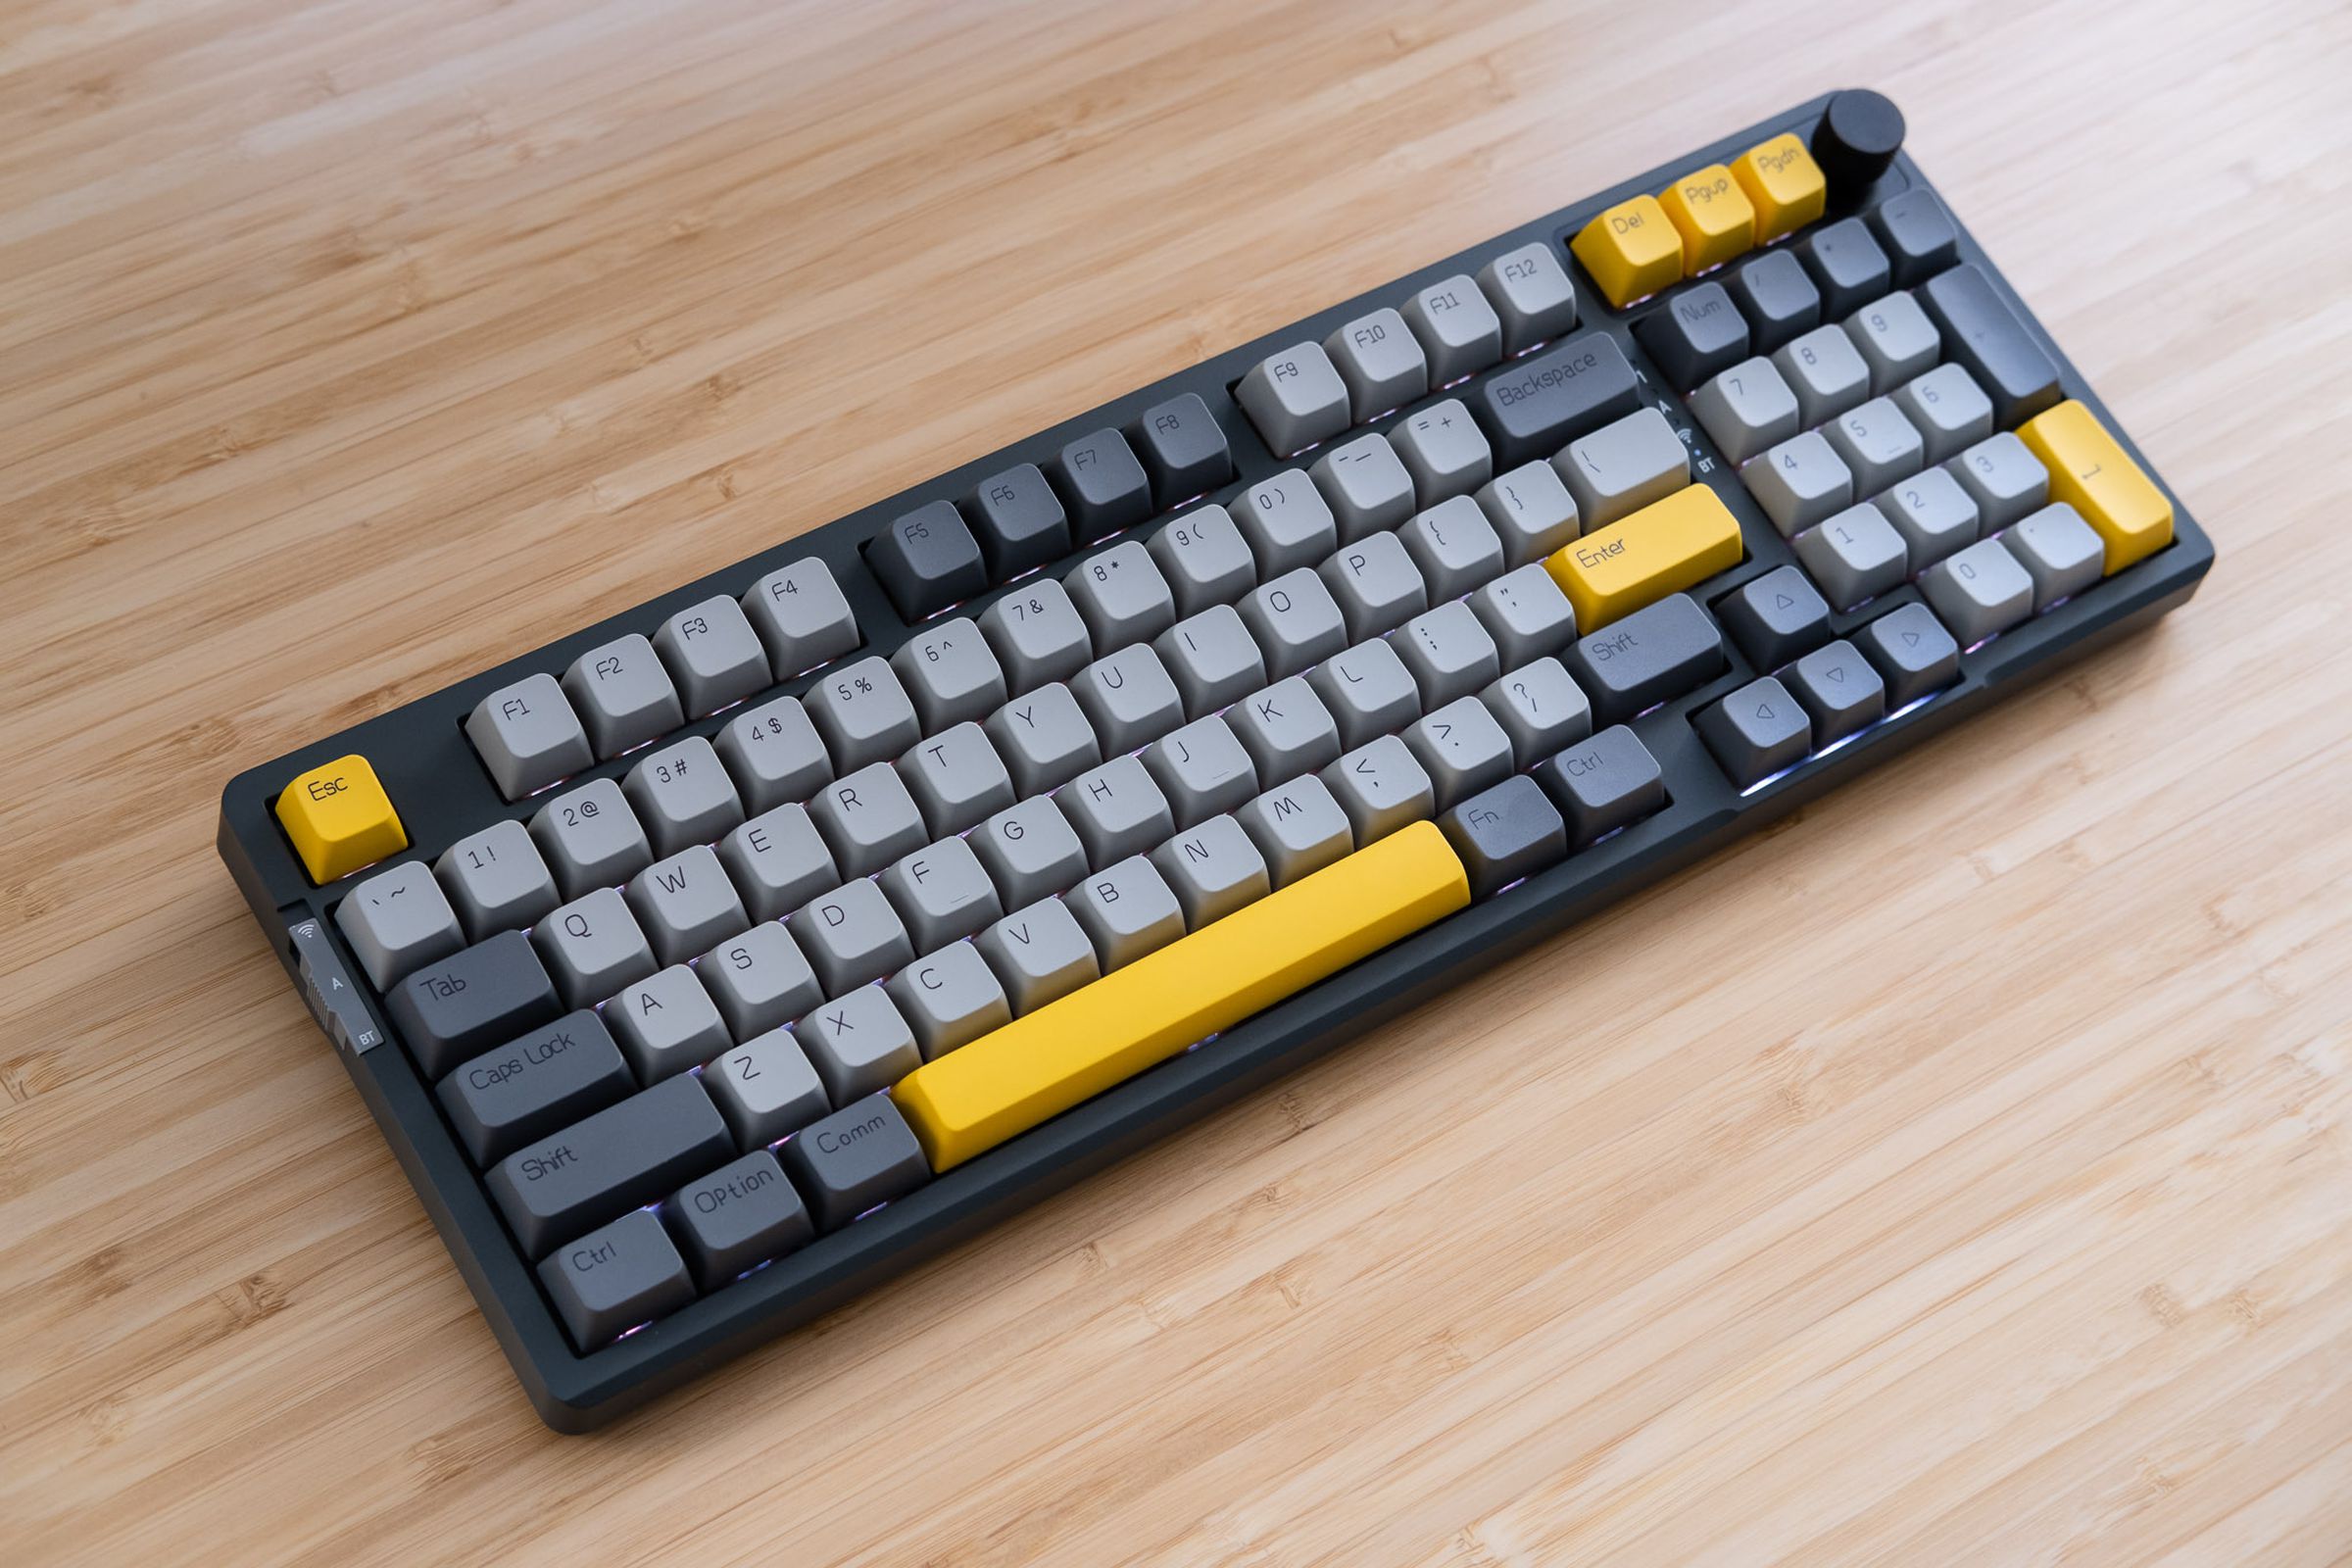 The Ajazz AK966 keyboard on a desk.